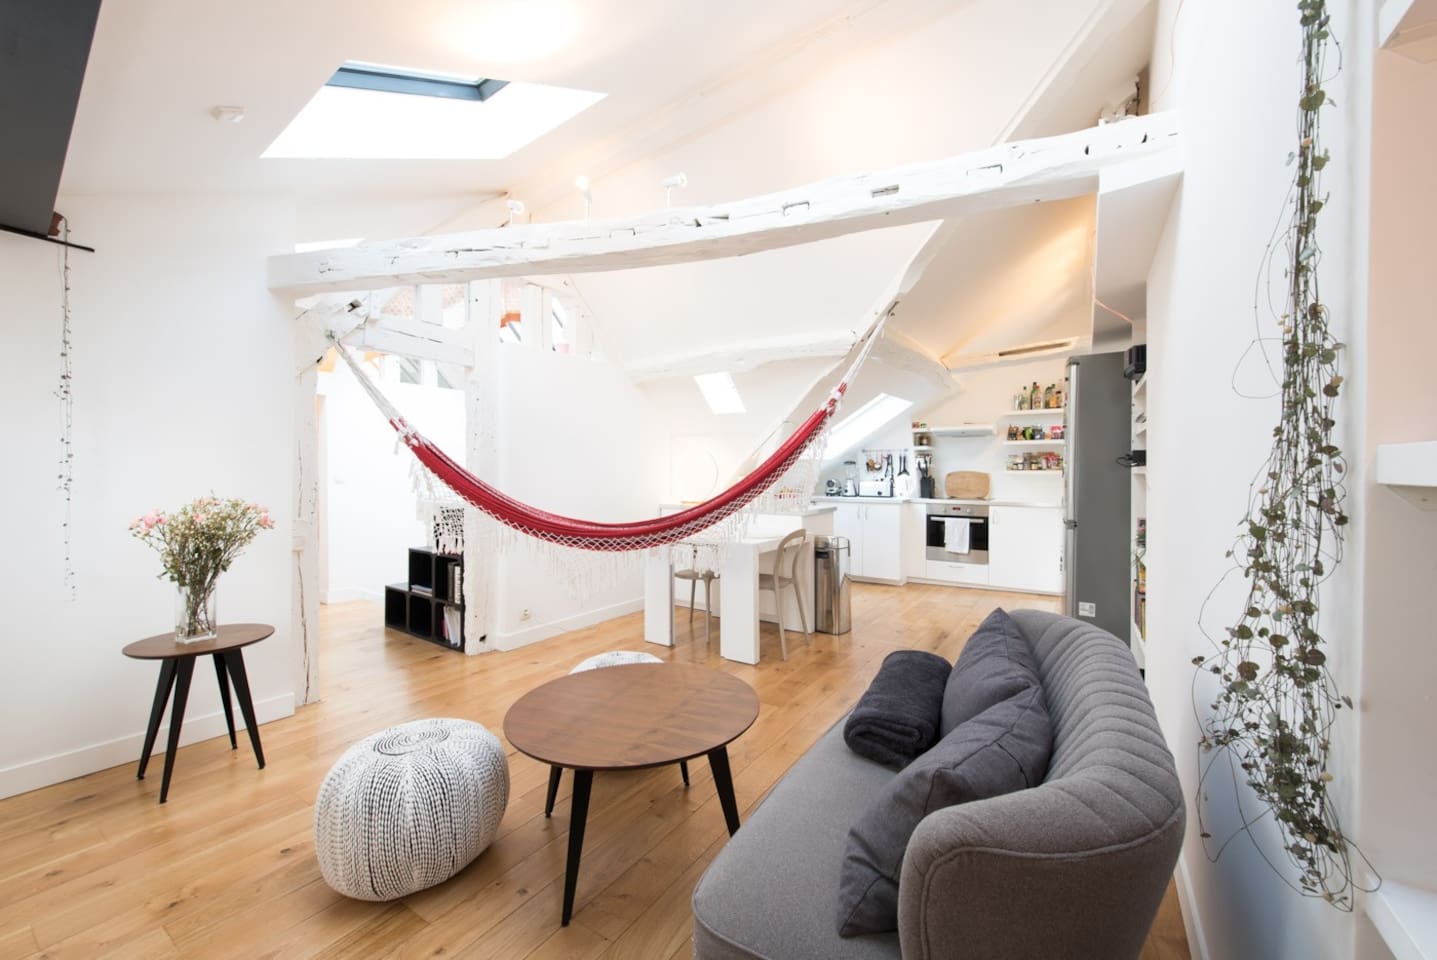 Best Airbnb in paris, Cal McTravels, www.calmctravels.com